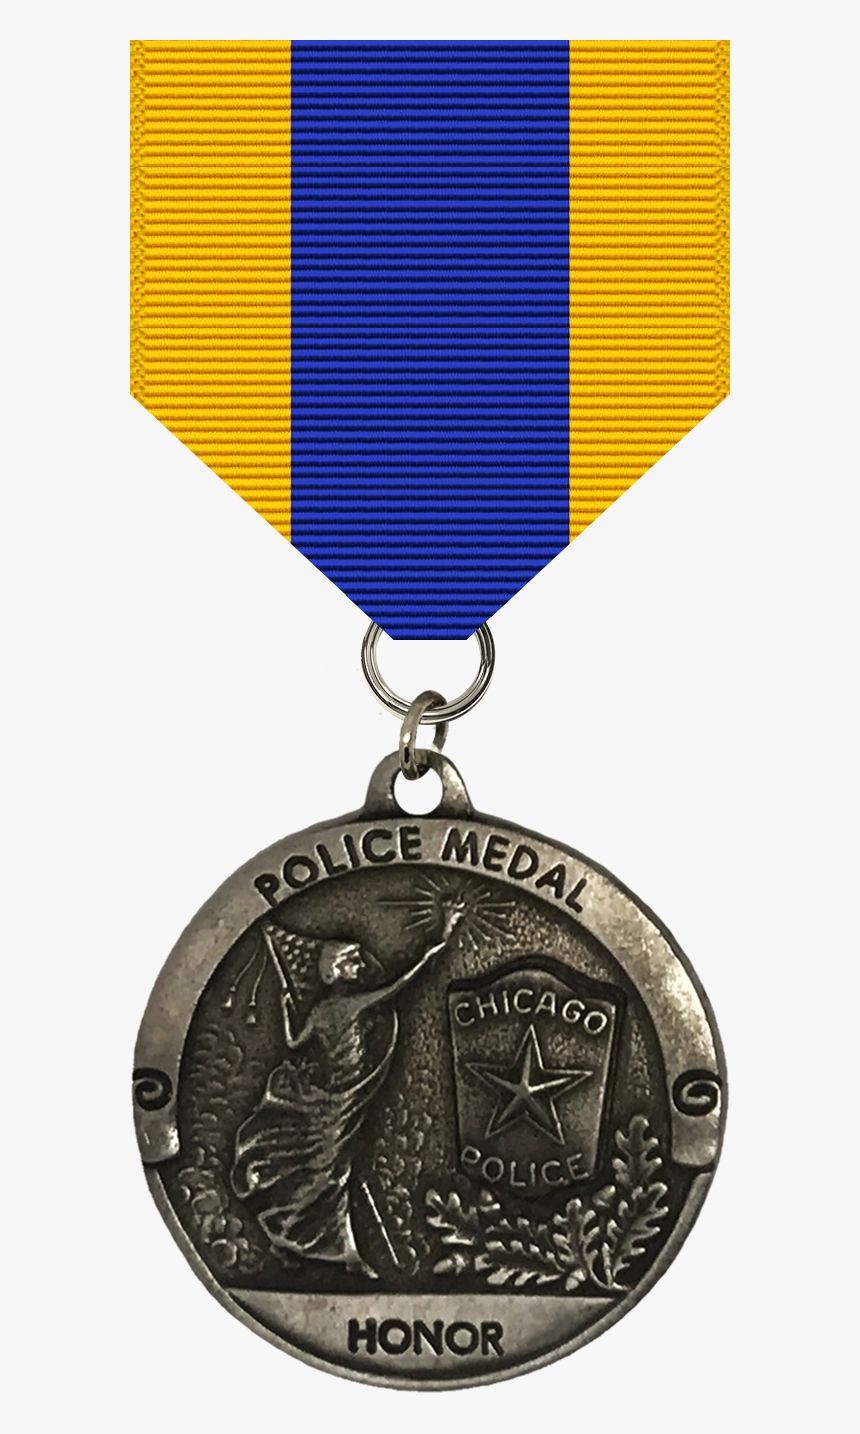 Police Medal Award Medal - Silver Medal, HD Png Download, Free Download